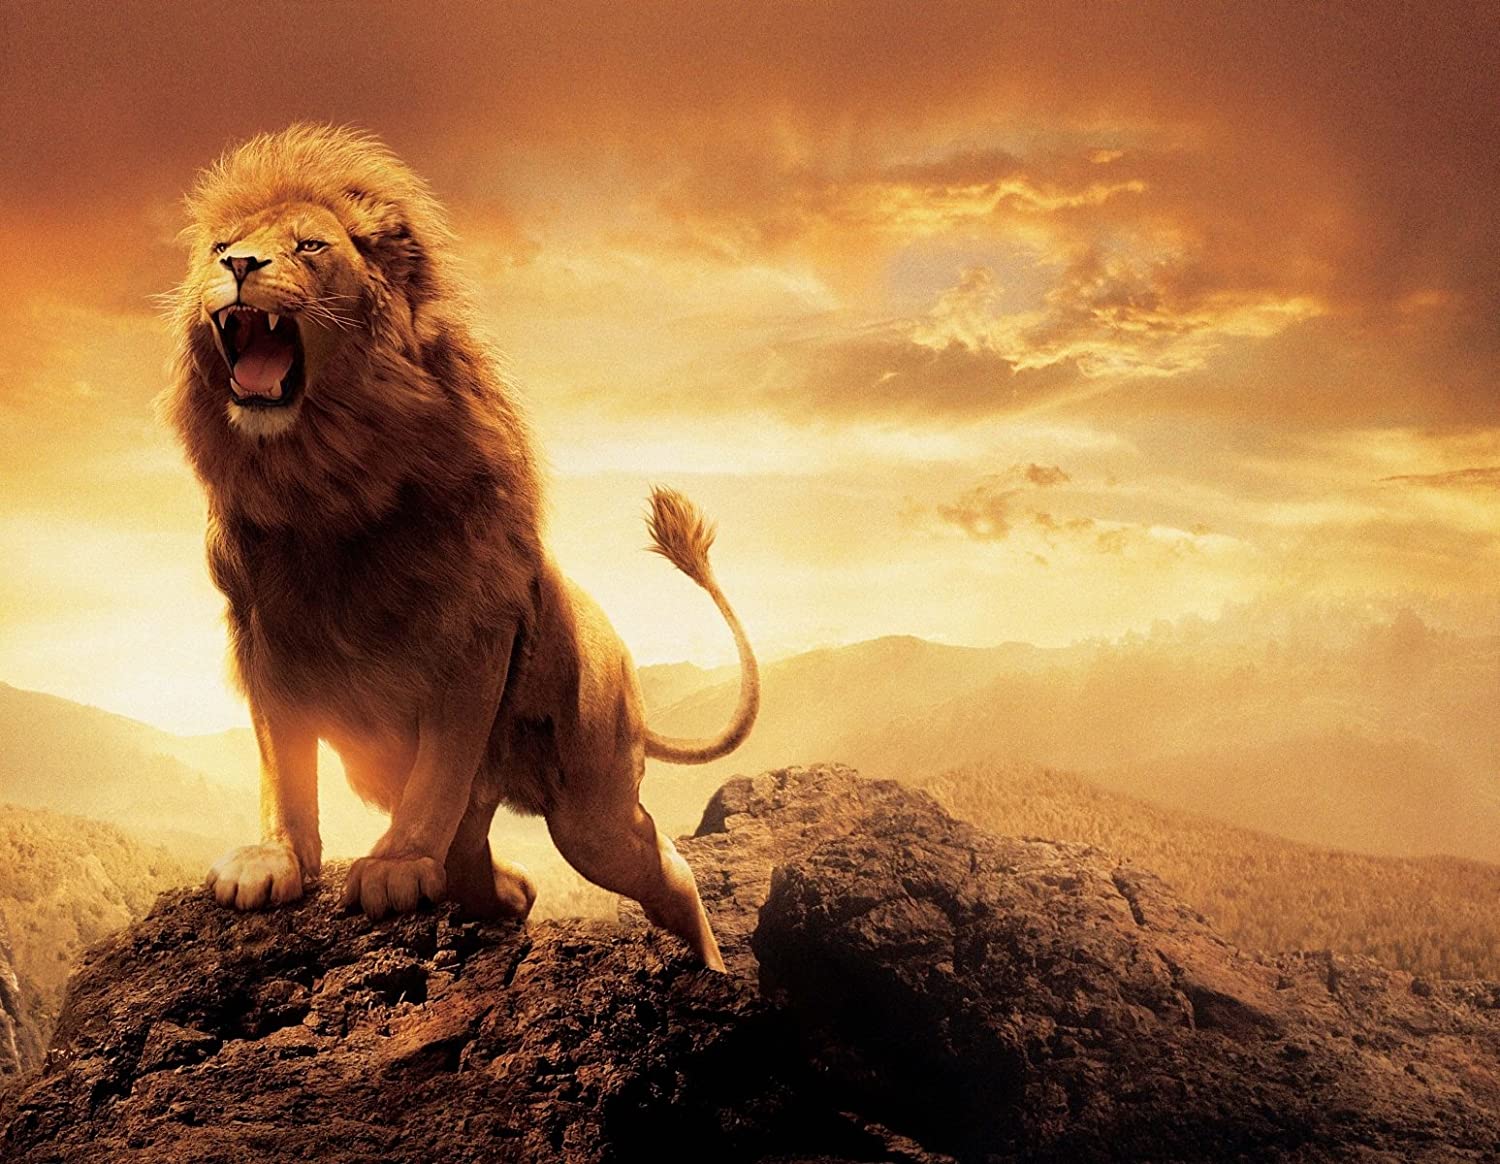 Stukk lion king roar print picture art poster